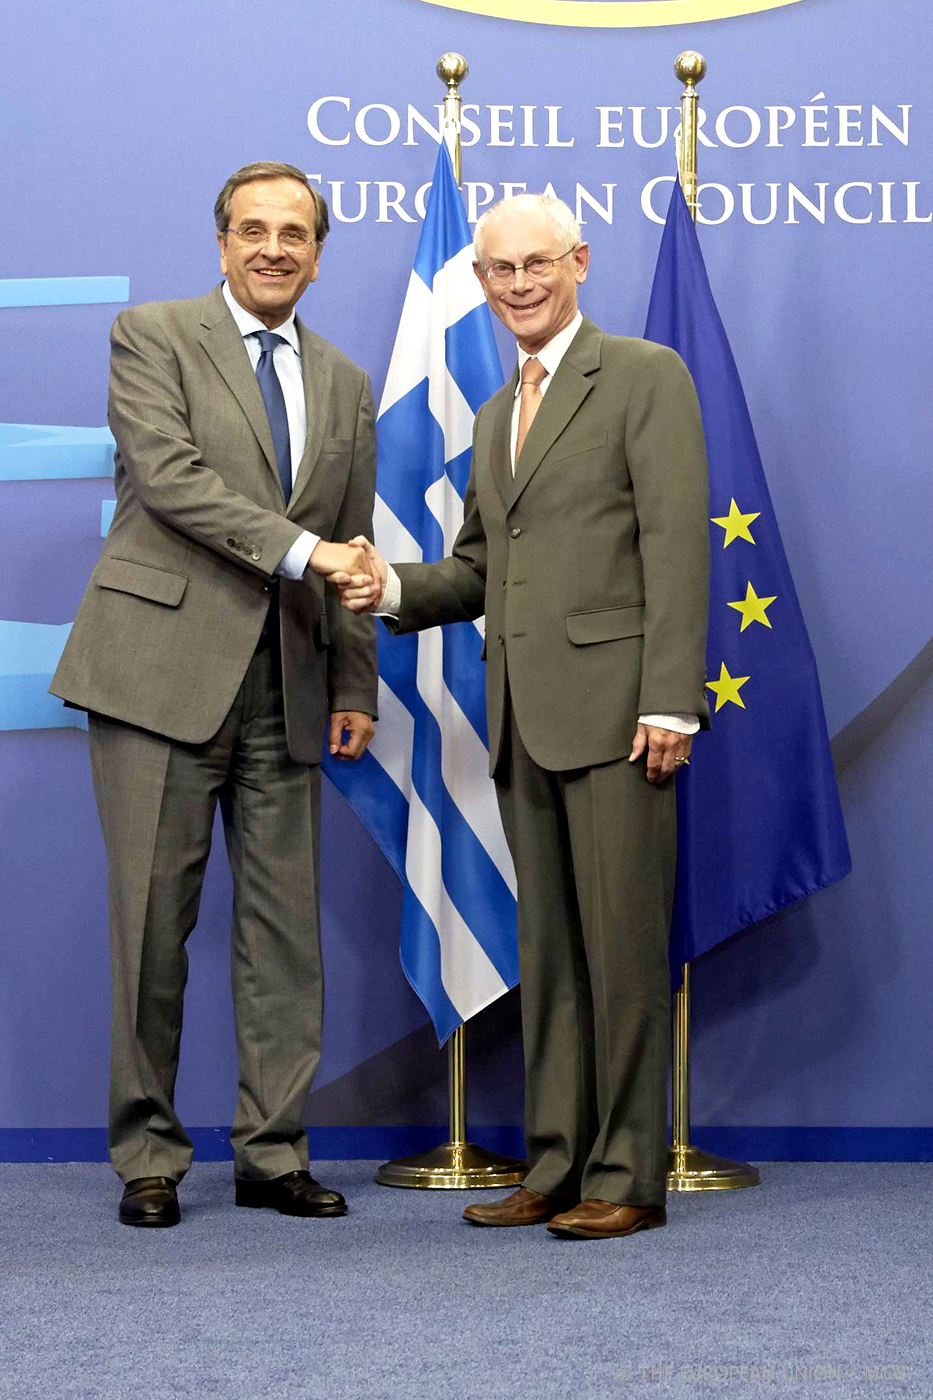 Greek Prime Ministr Antonis Samaras with President of the European Council Herman Van Rompuy